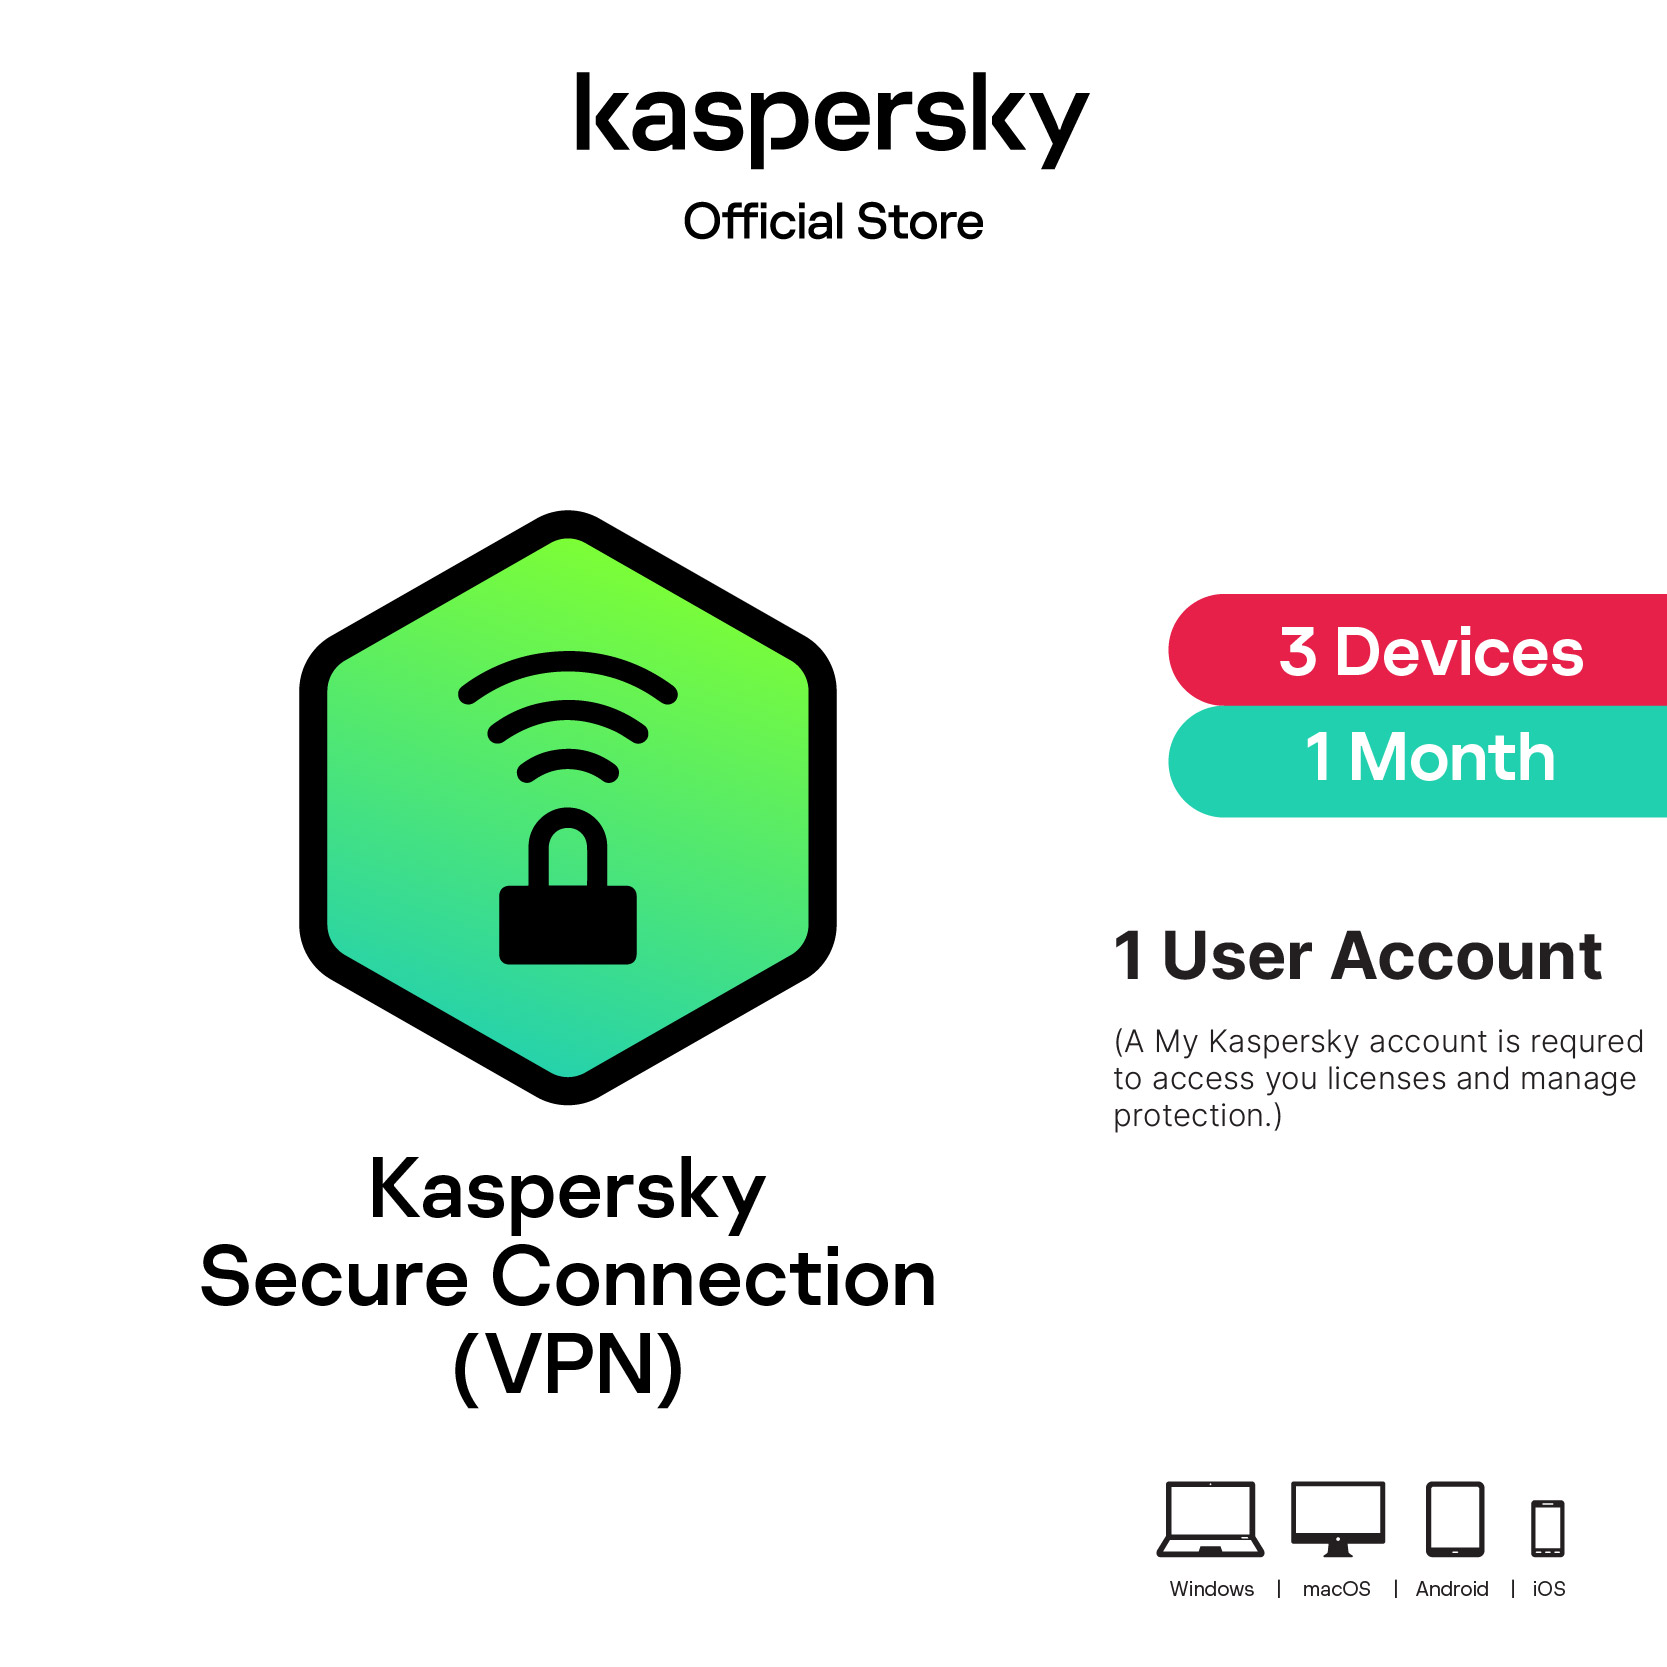 Kaspersky Secure Connection VPN 3 Devices 1 Month